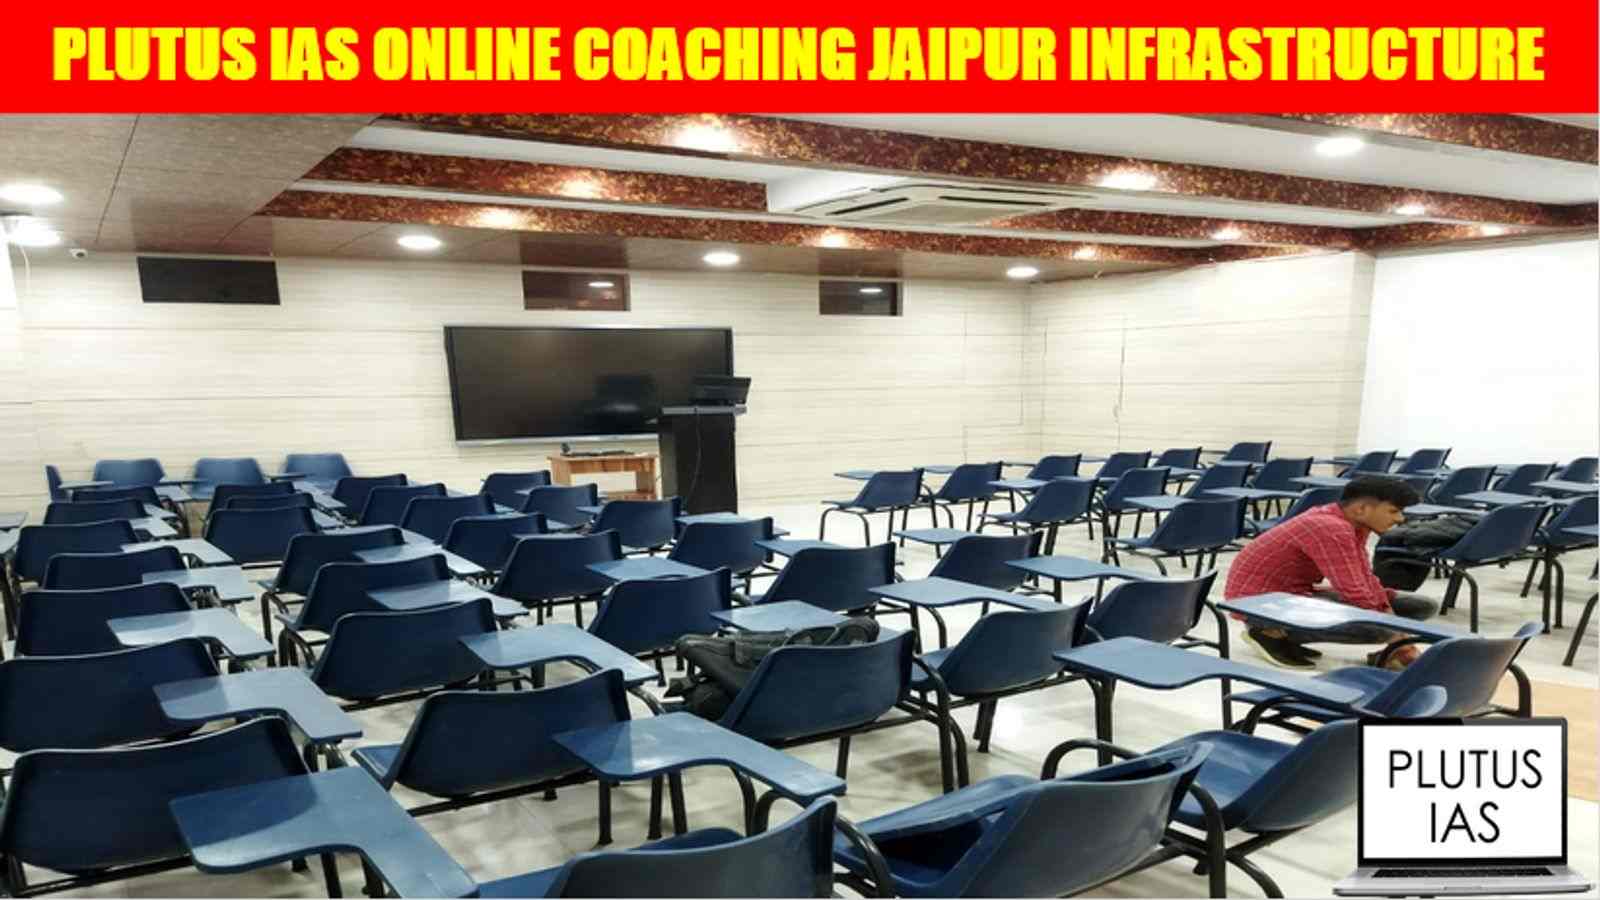 Plutus IAS Online Coaching Jaipur Infrastructure